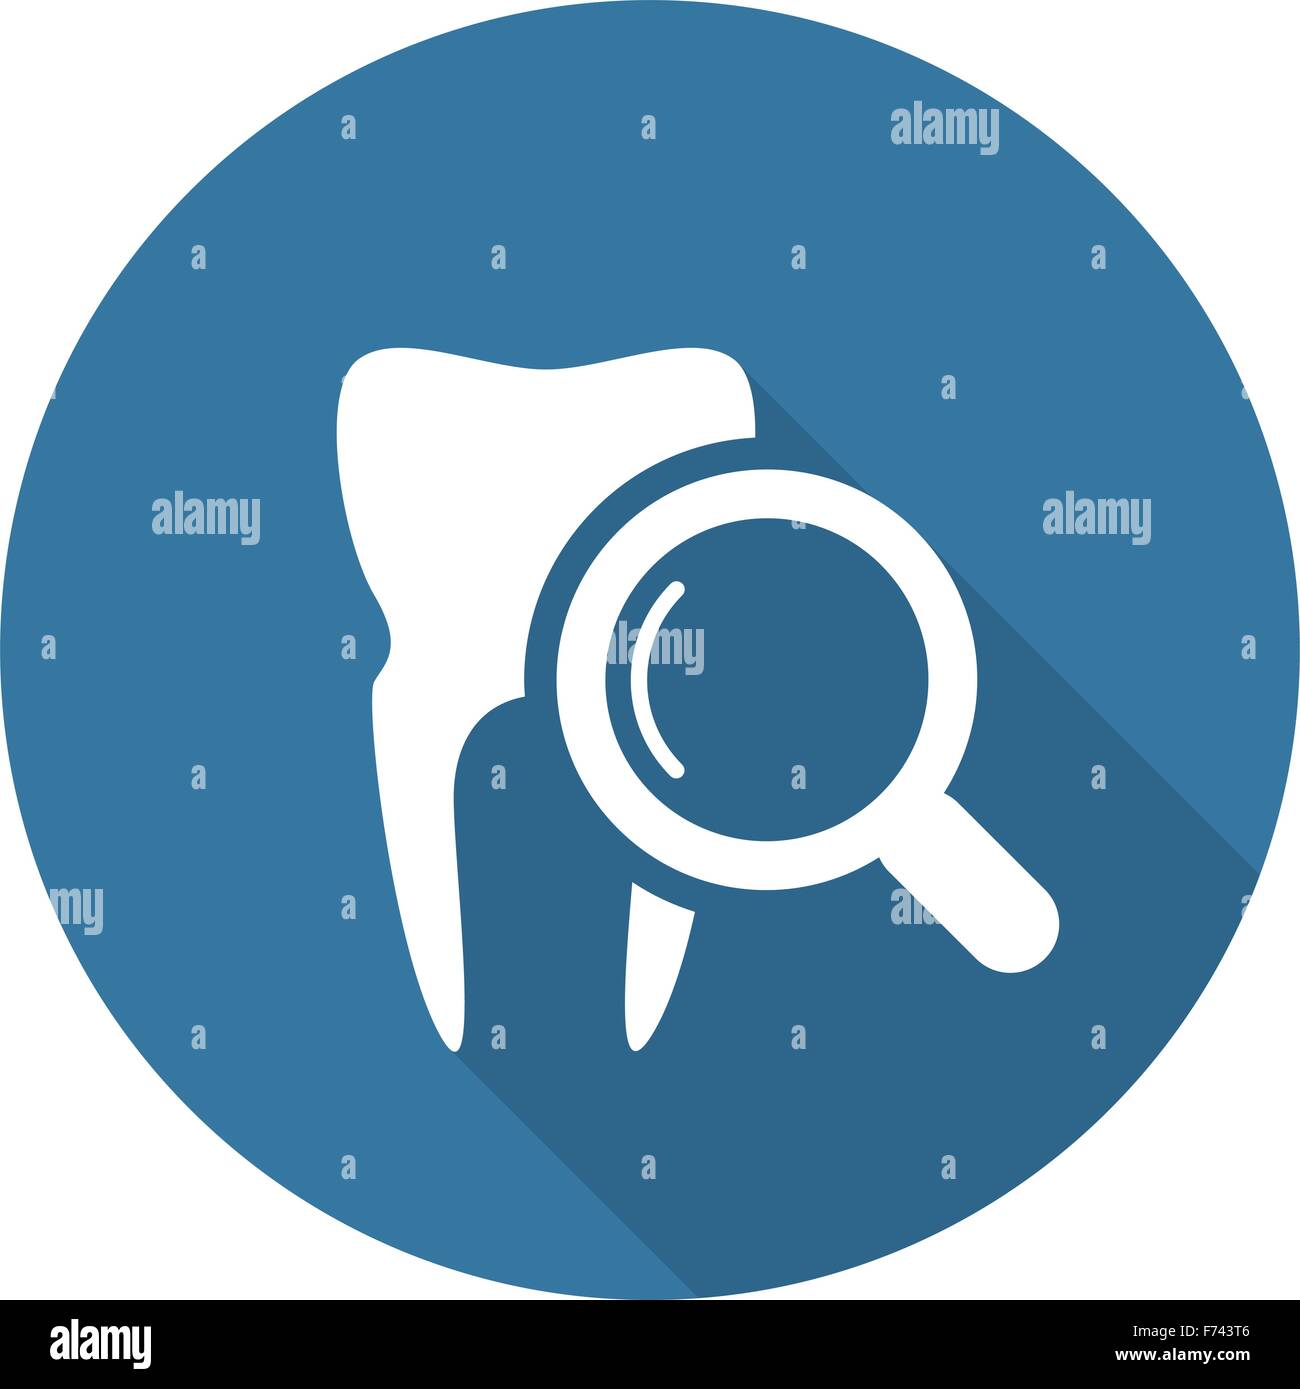 dental-care-icon-flat-design-F743T6.jpg